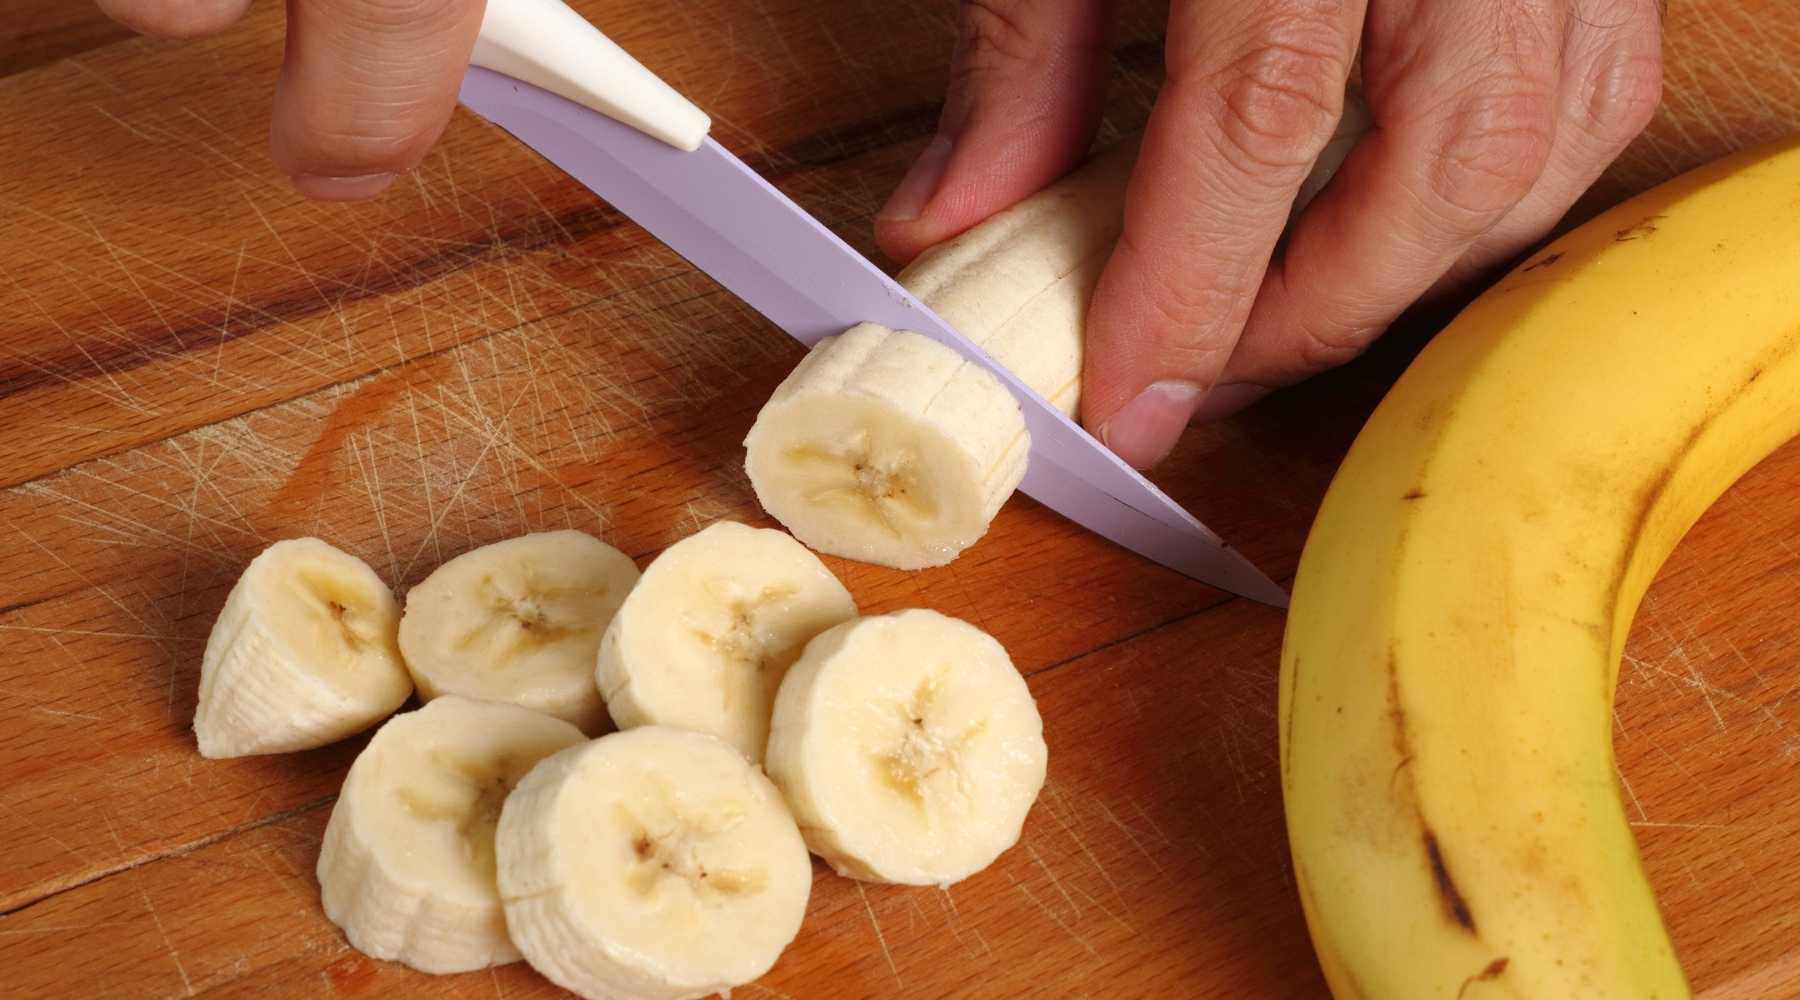 peel and slice the banana